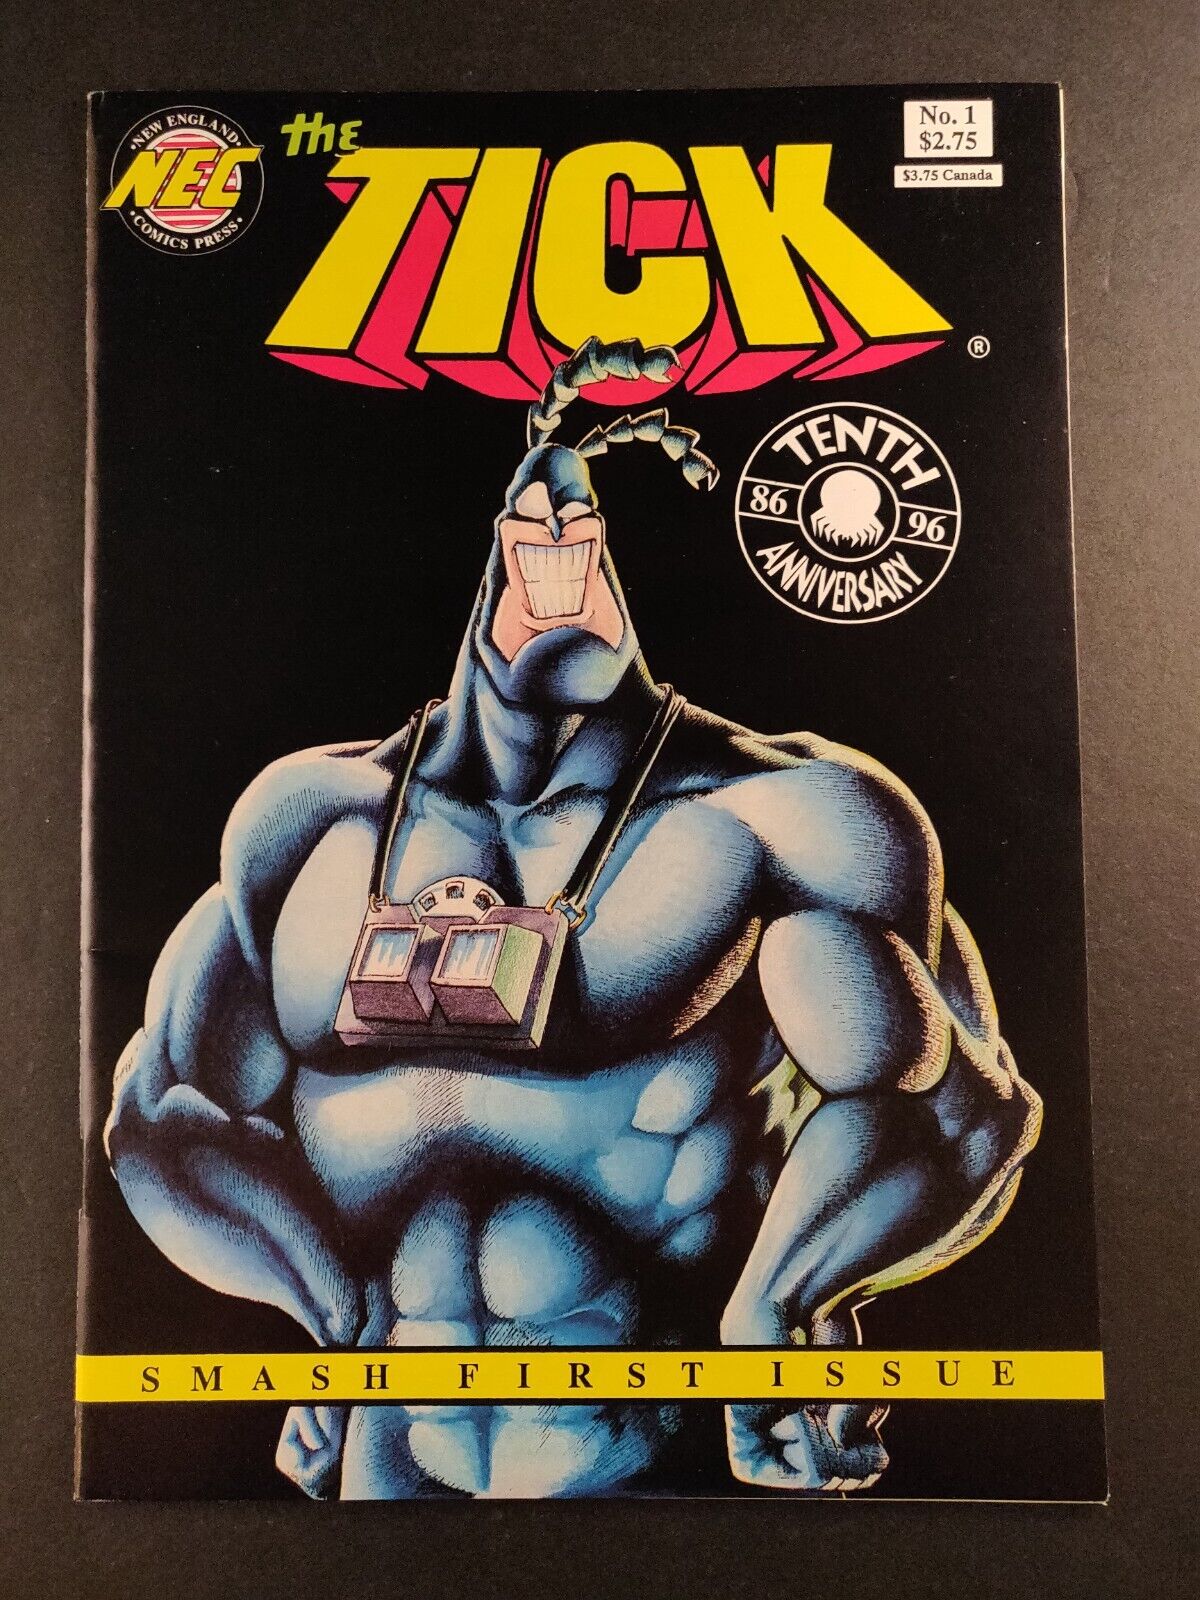 THE TICK #1 (New England Comics 1996) 10th ANNIVERSARY 8th Print Variant VF